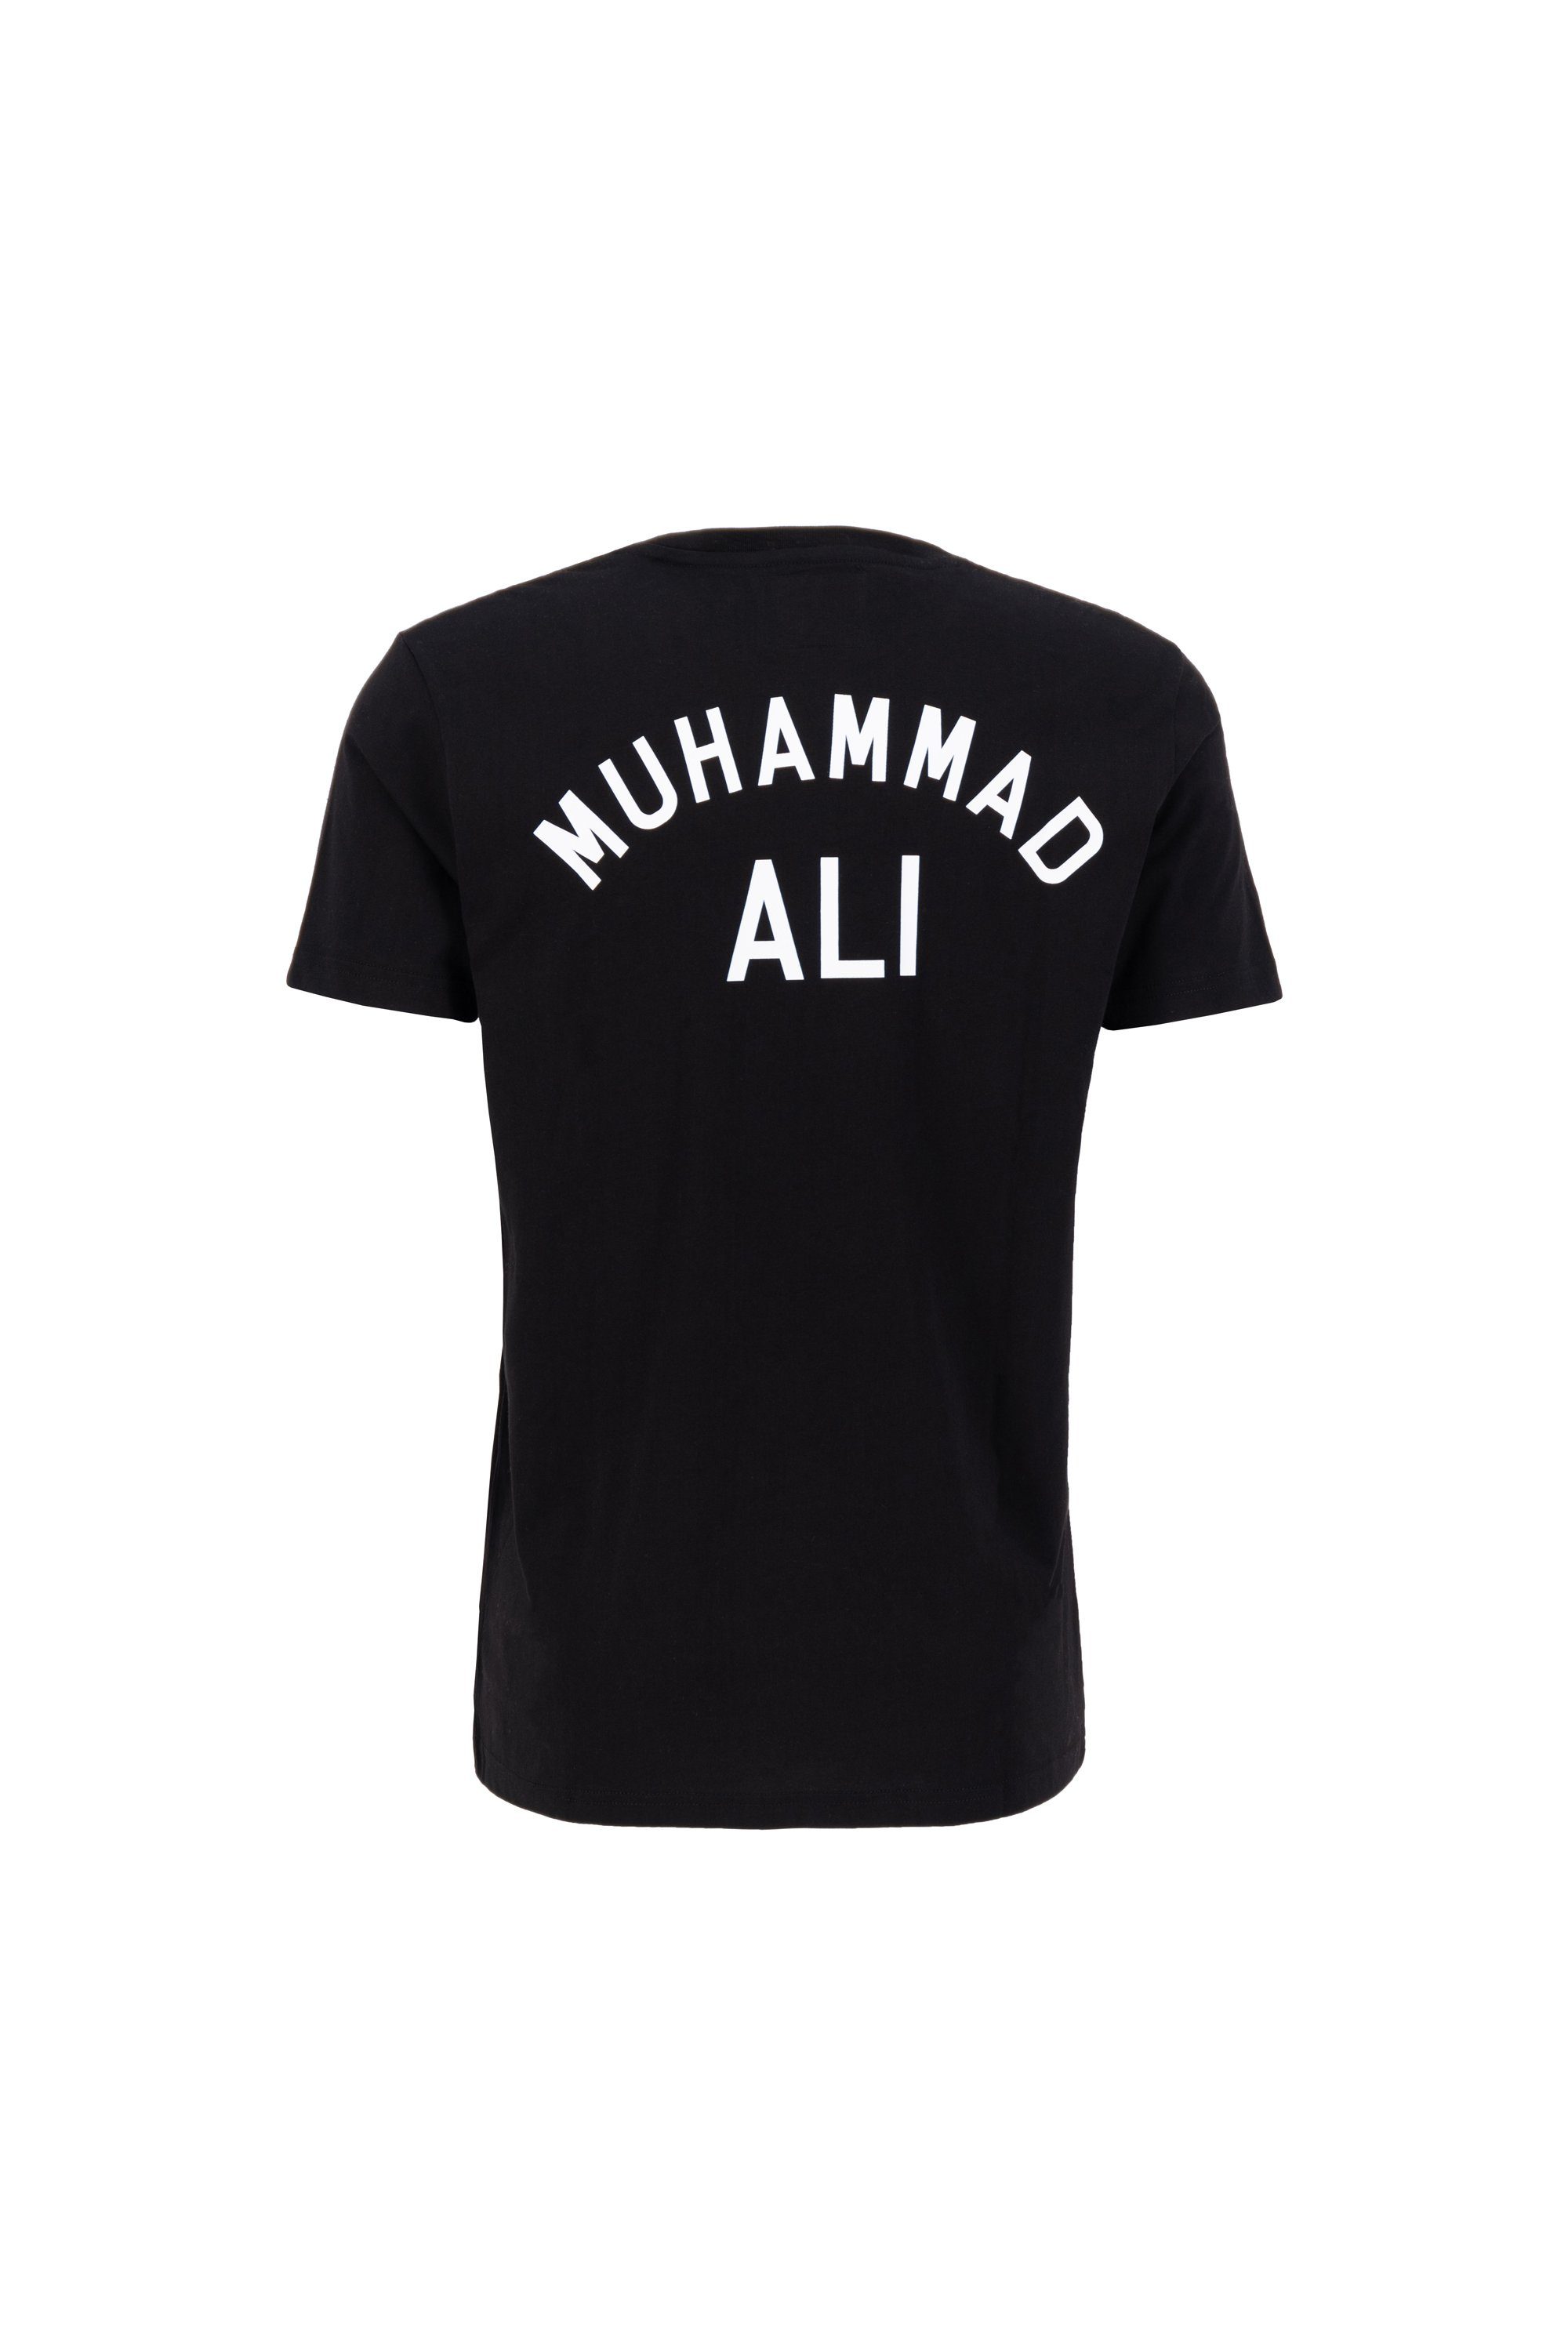 Alpha Industries Ali T-Shirts Men Muhammad T-Shirt - Industries black T Alpha BP